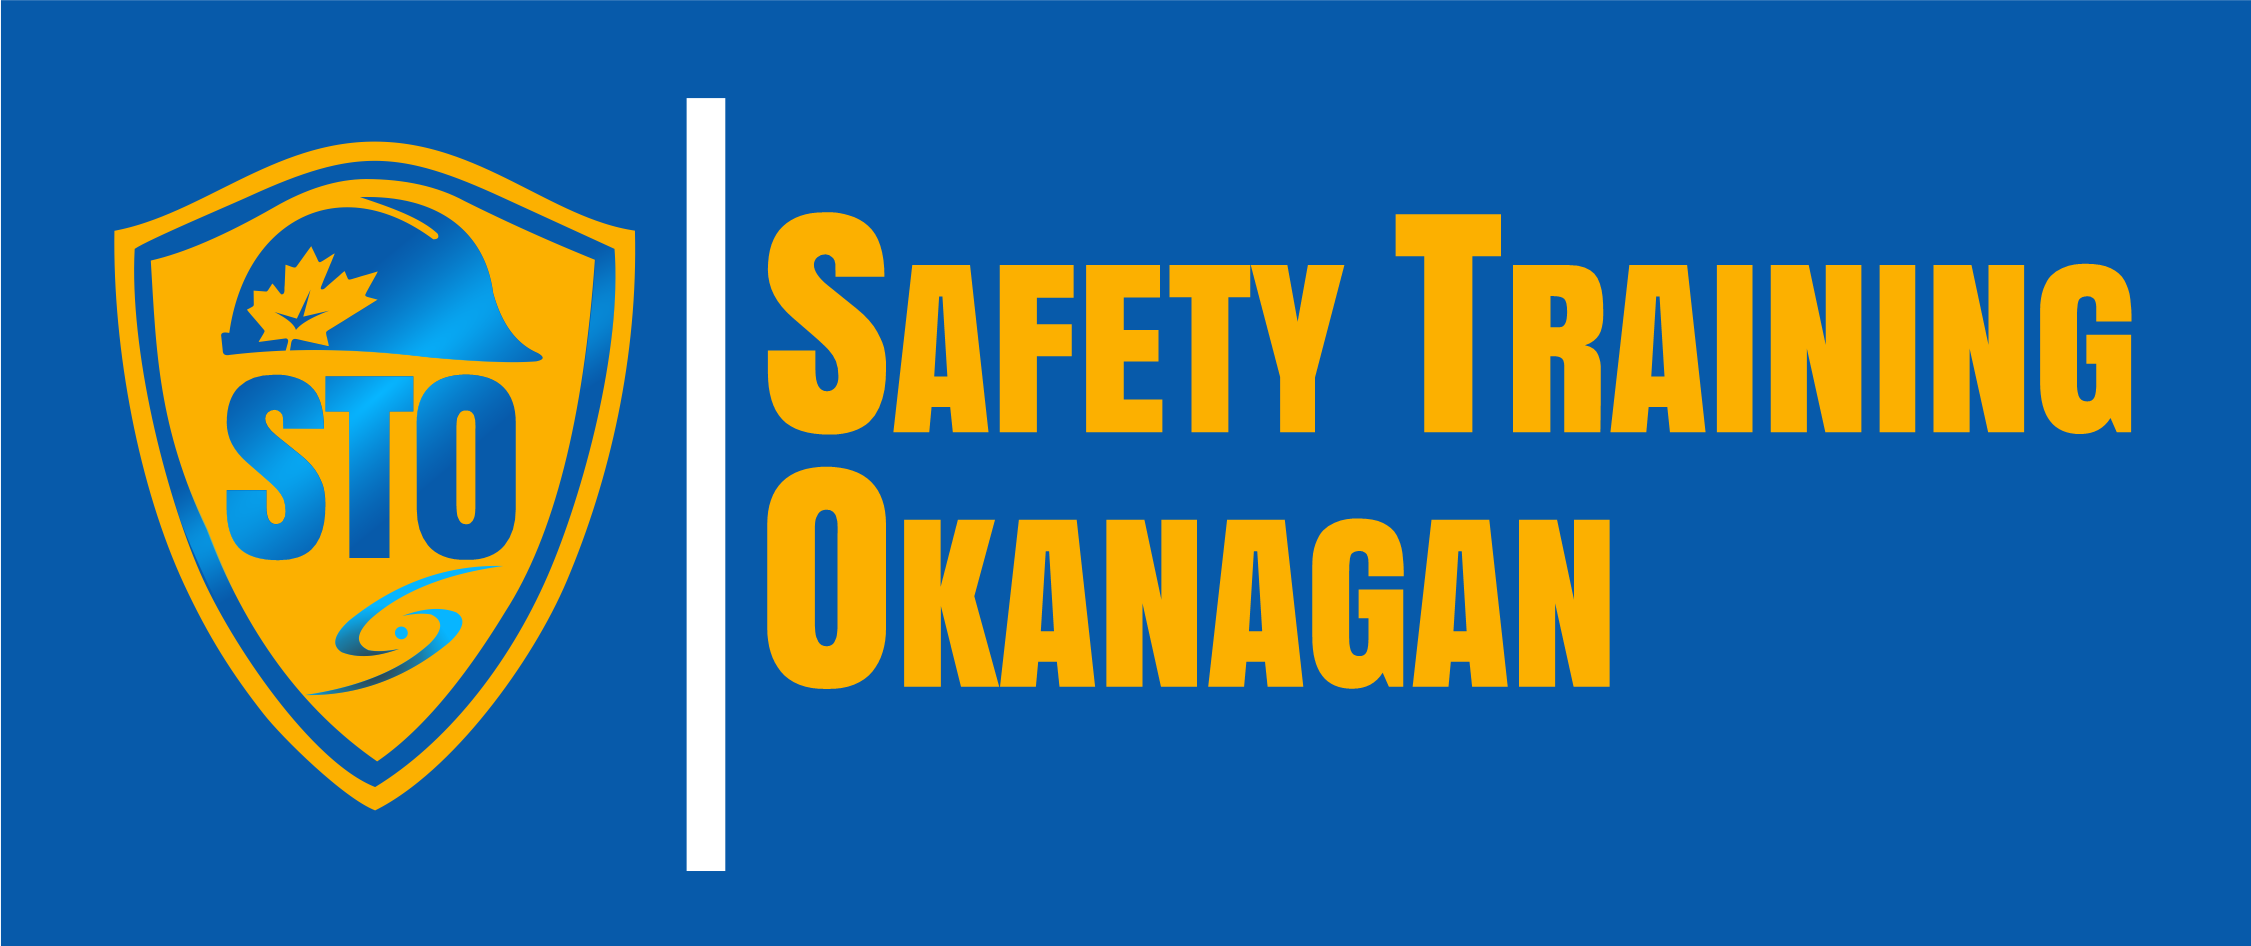 SAFETY TRAINING OKANAGAN Ltd.